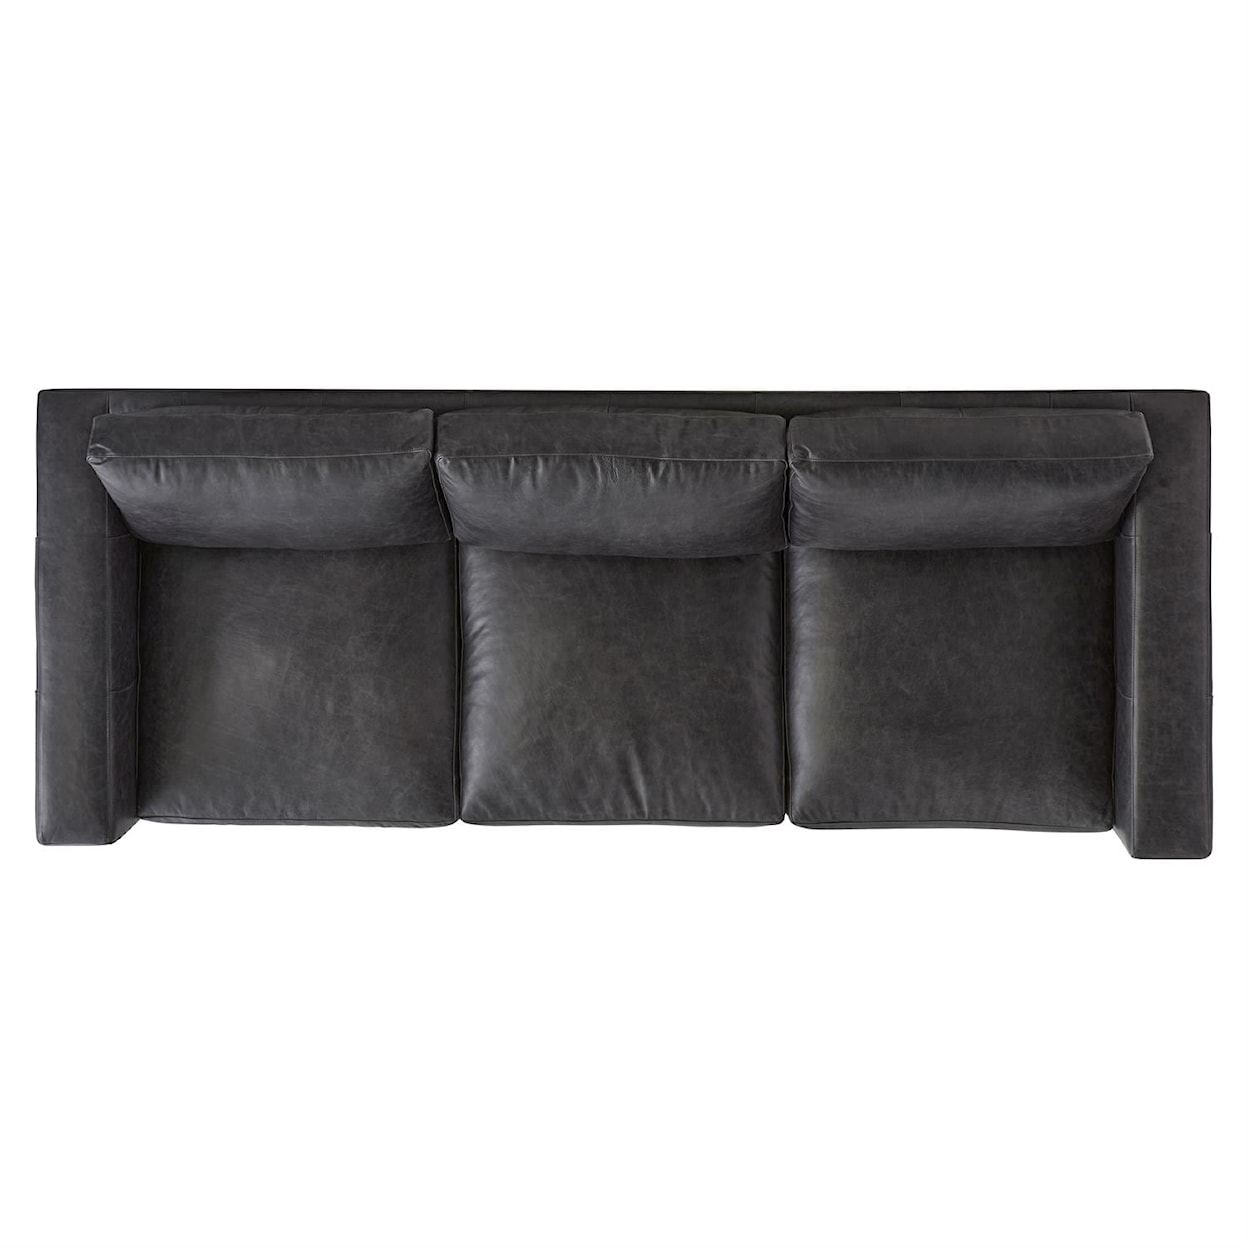 Bernhardt Bernhardt Living Noel Leather Sofa Without Pillows